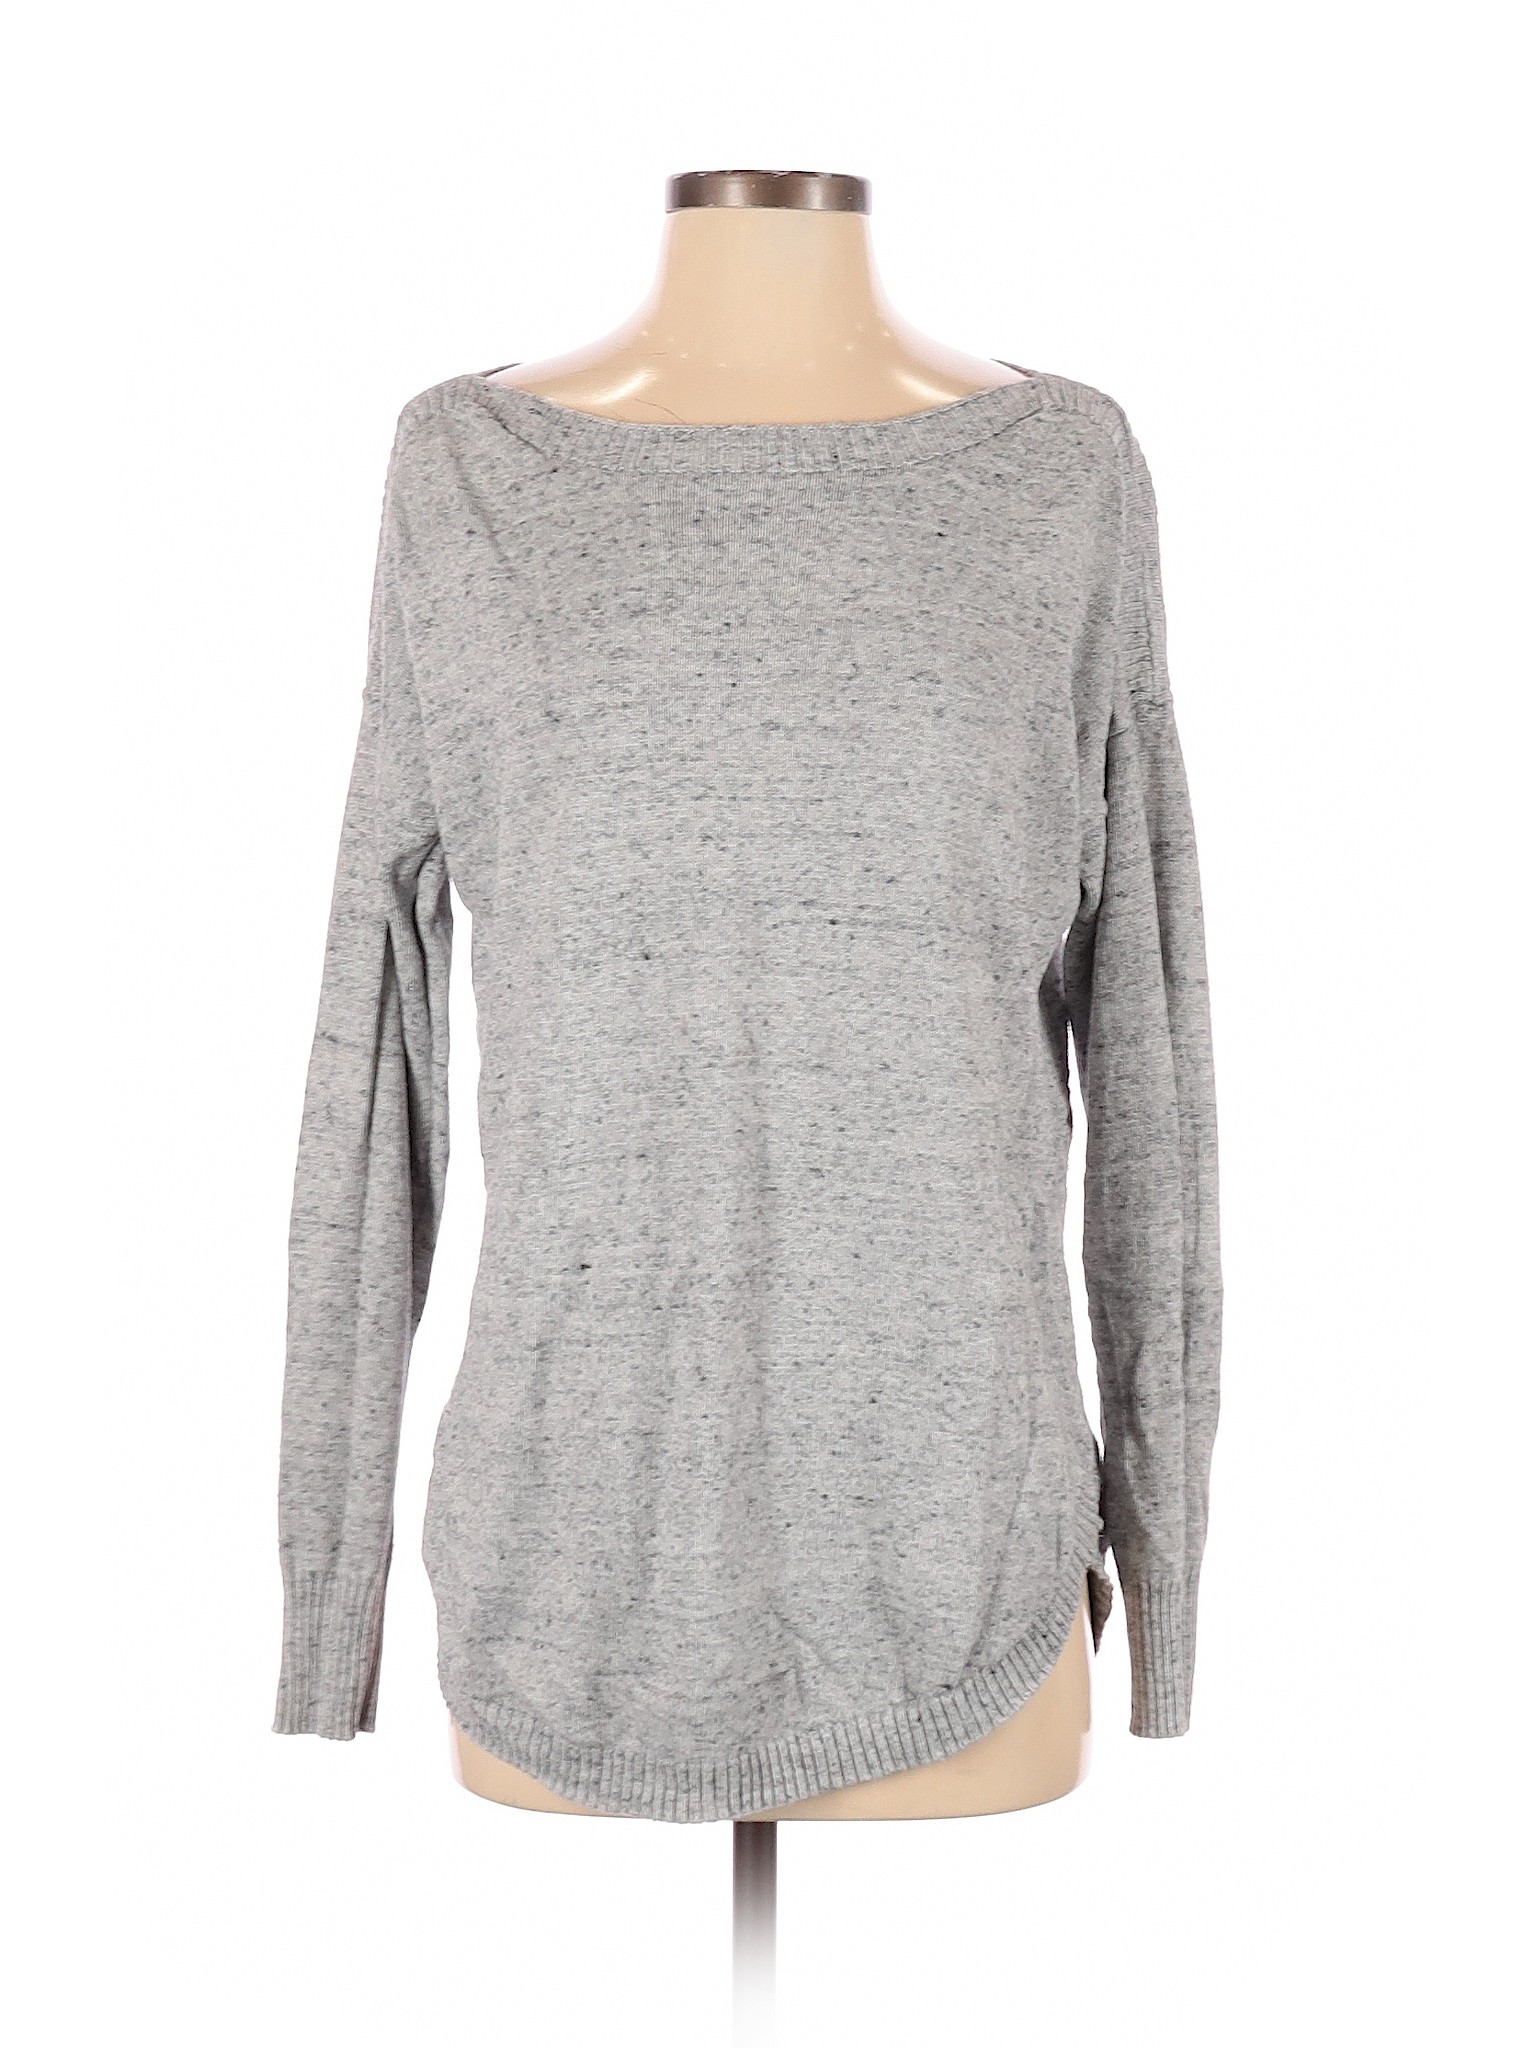 Style&Co Women Gray Pullover Sweater S | eBay